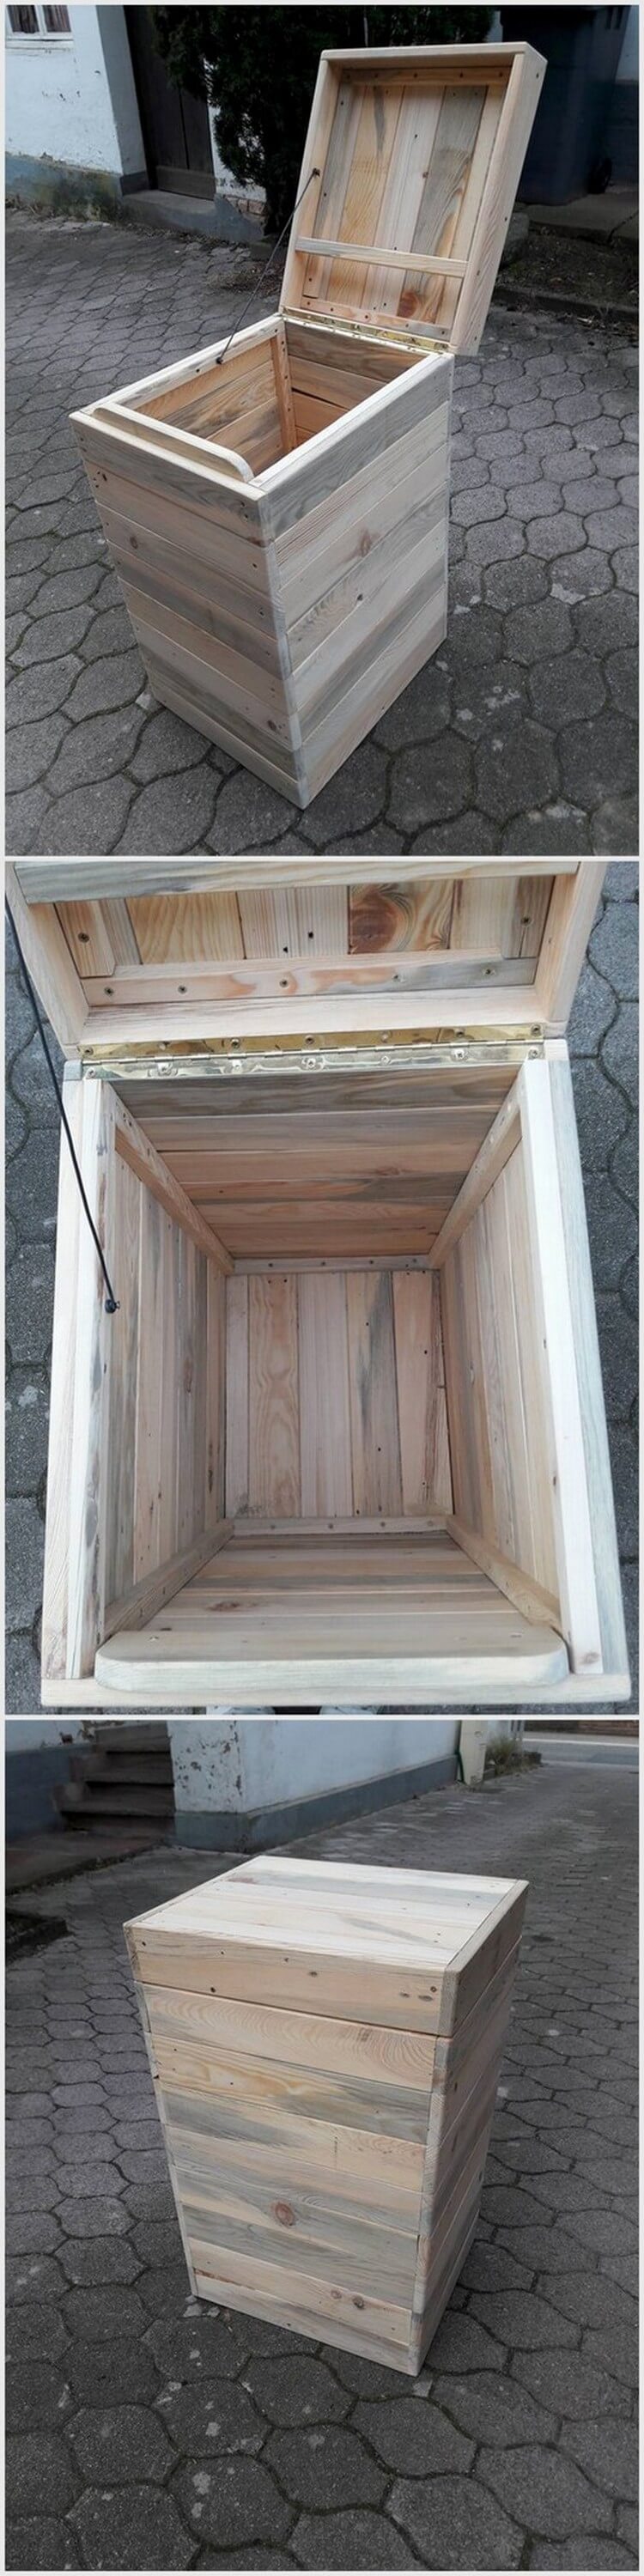 Ingenious DIY Ideas to Repurpose Old Wood Pallets | Pallet ...